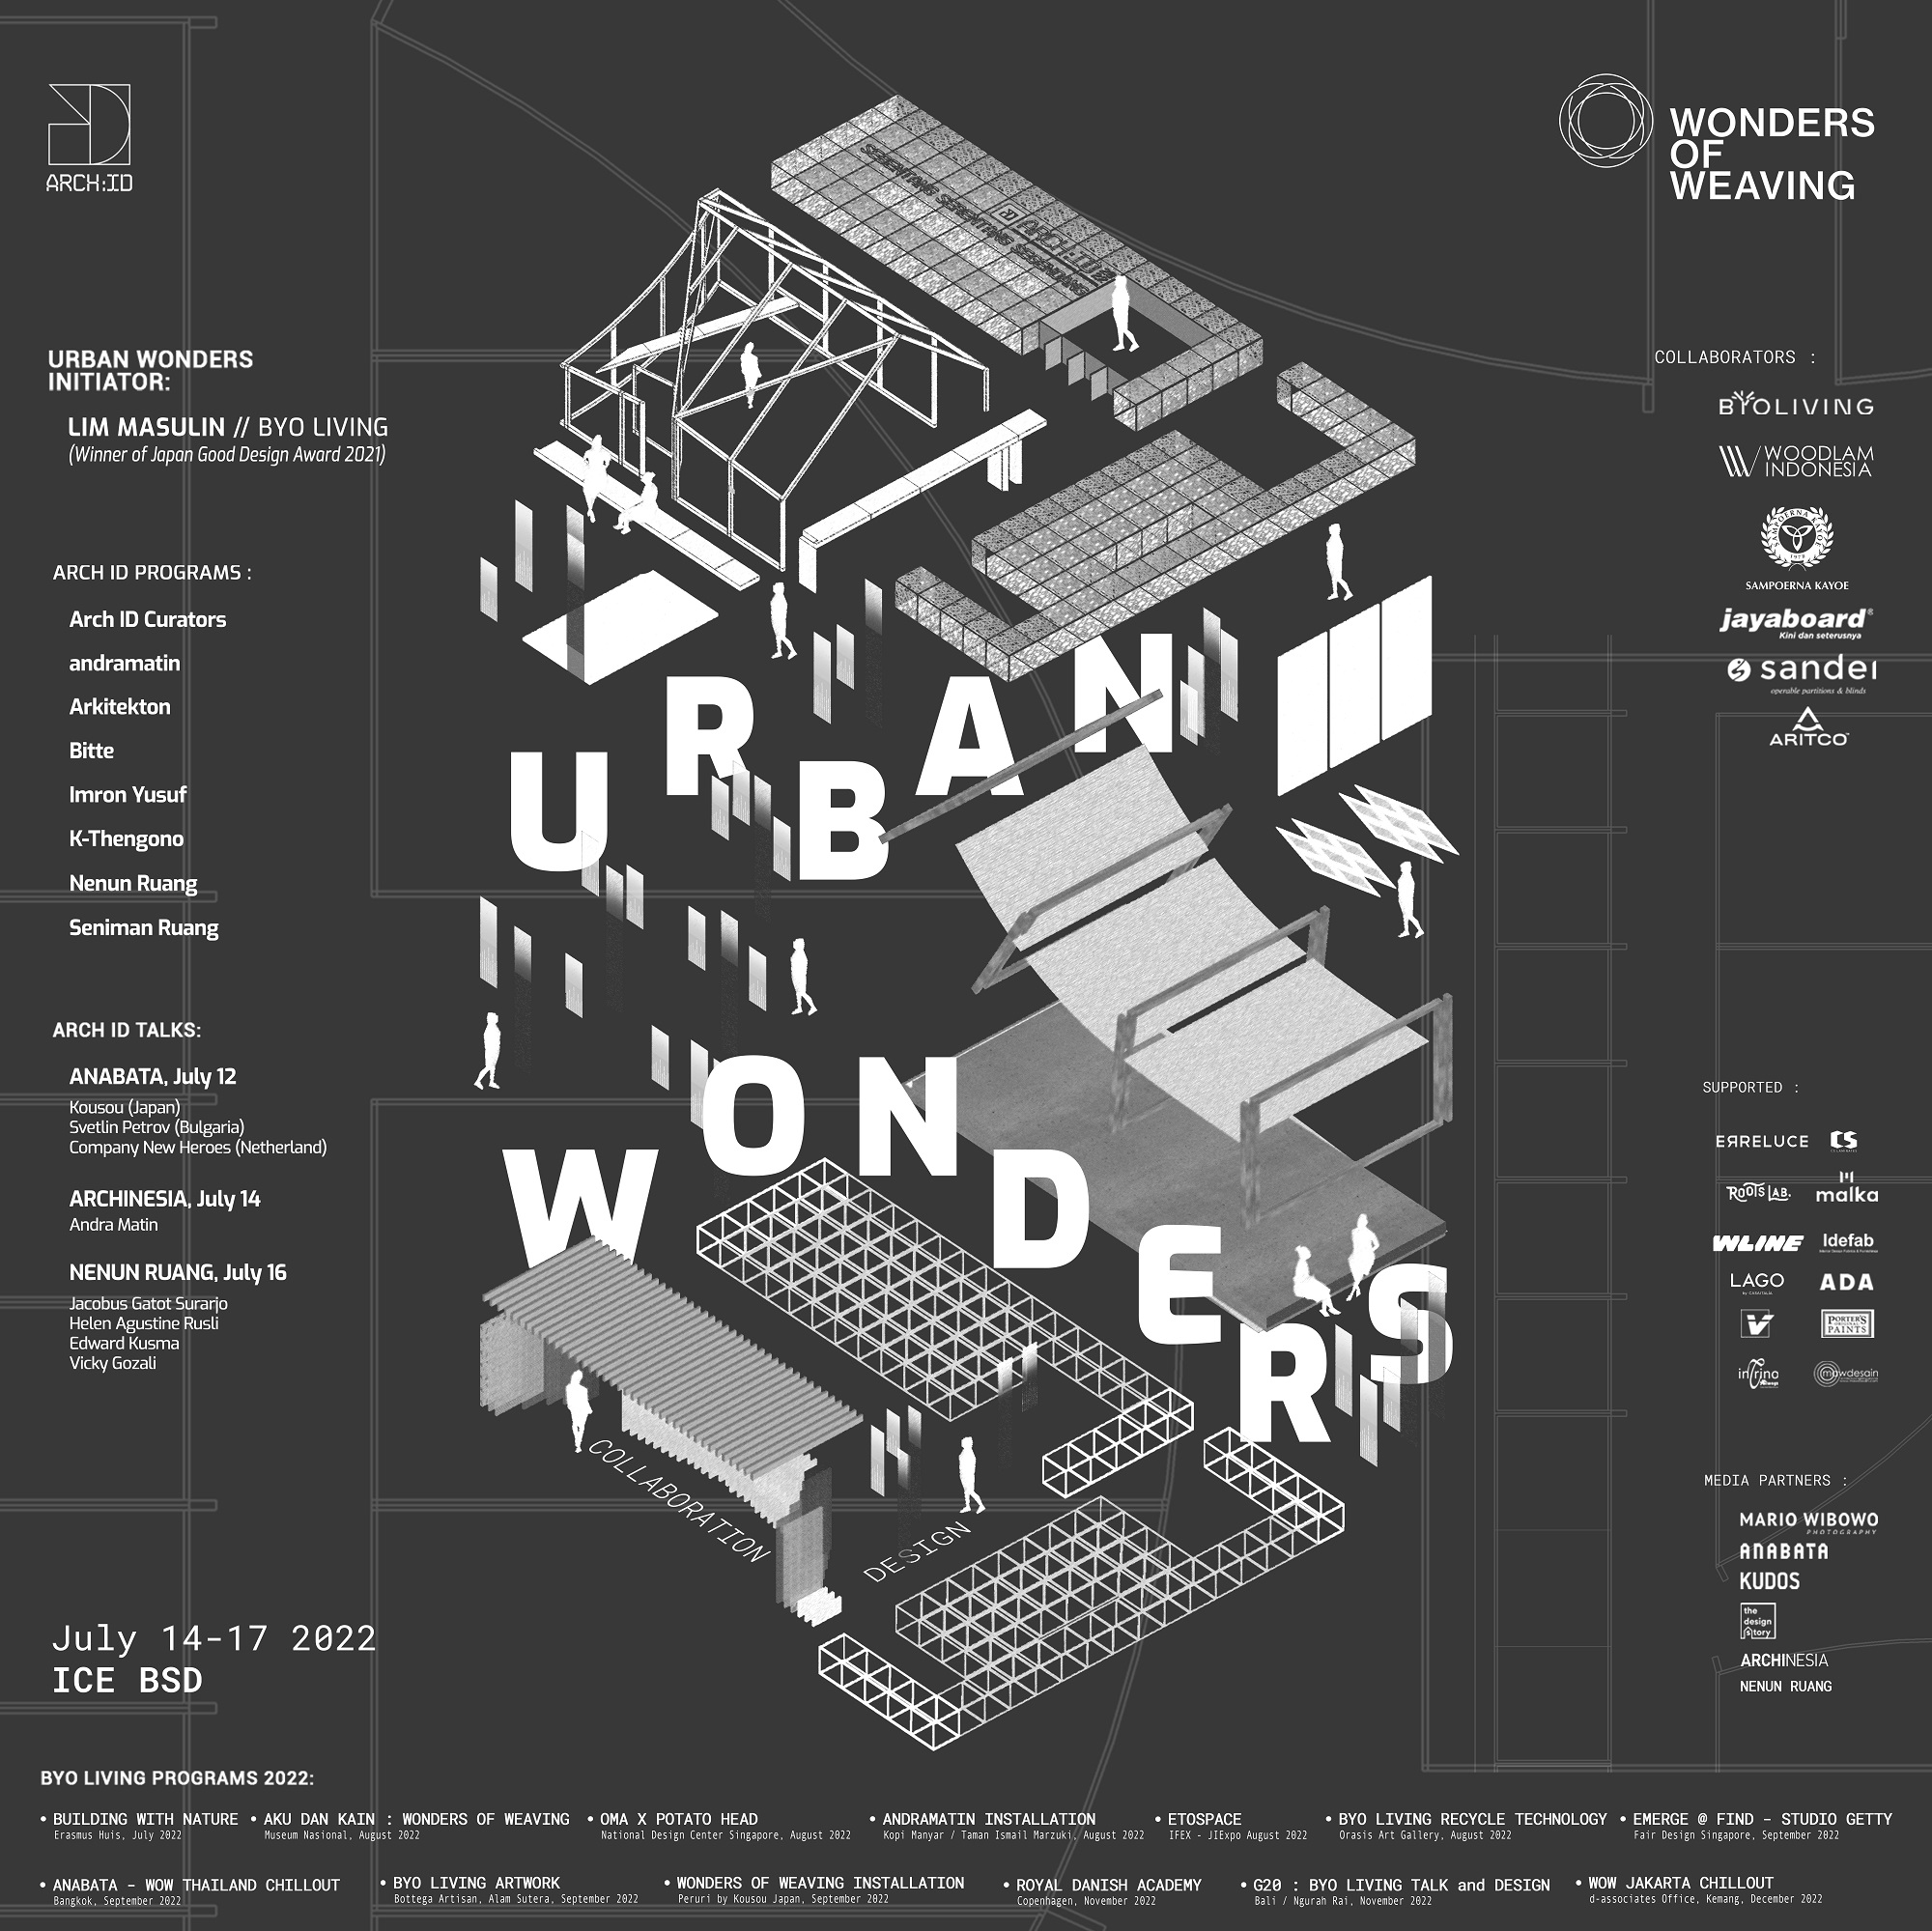 Wonders of Weaving "Urban Wonders" at ARCH:ID 2022 Exhibition